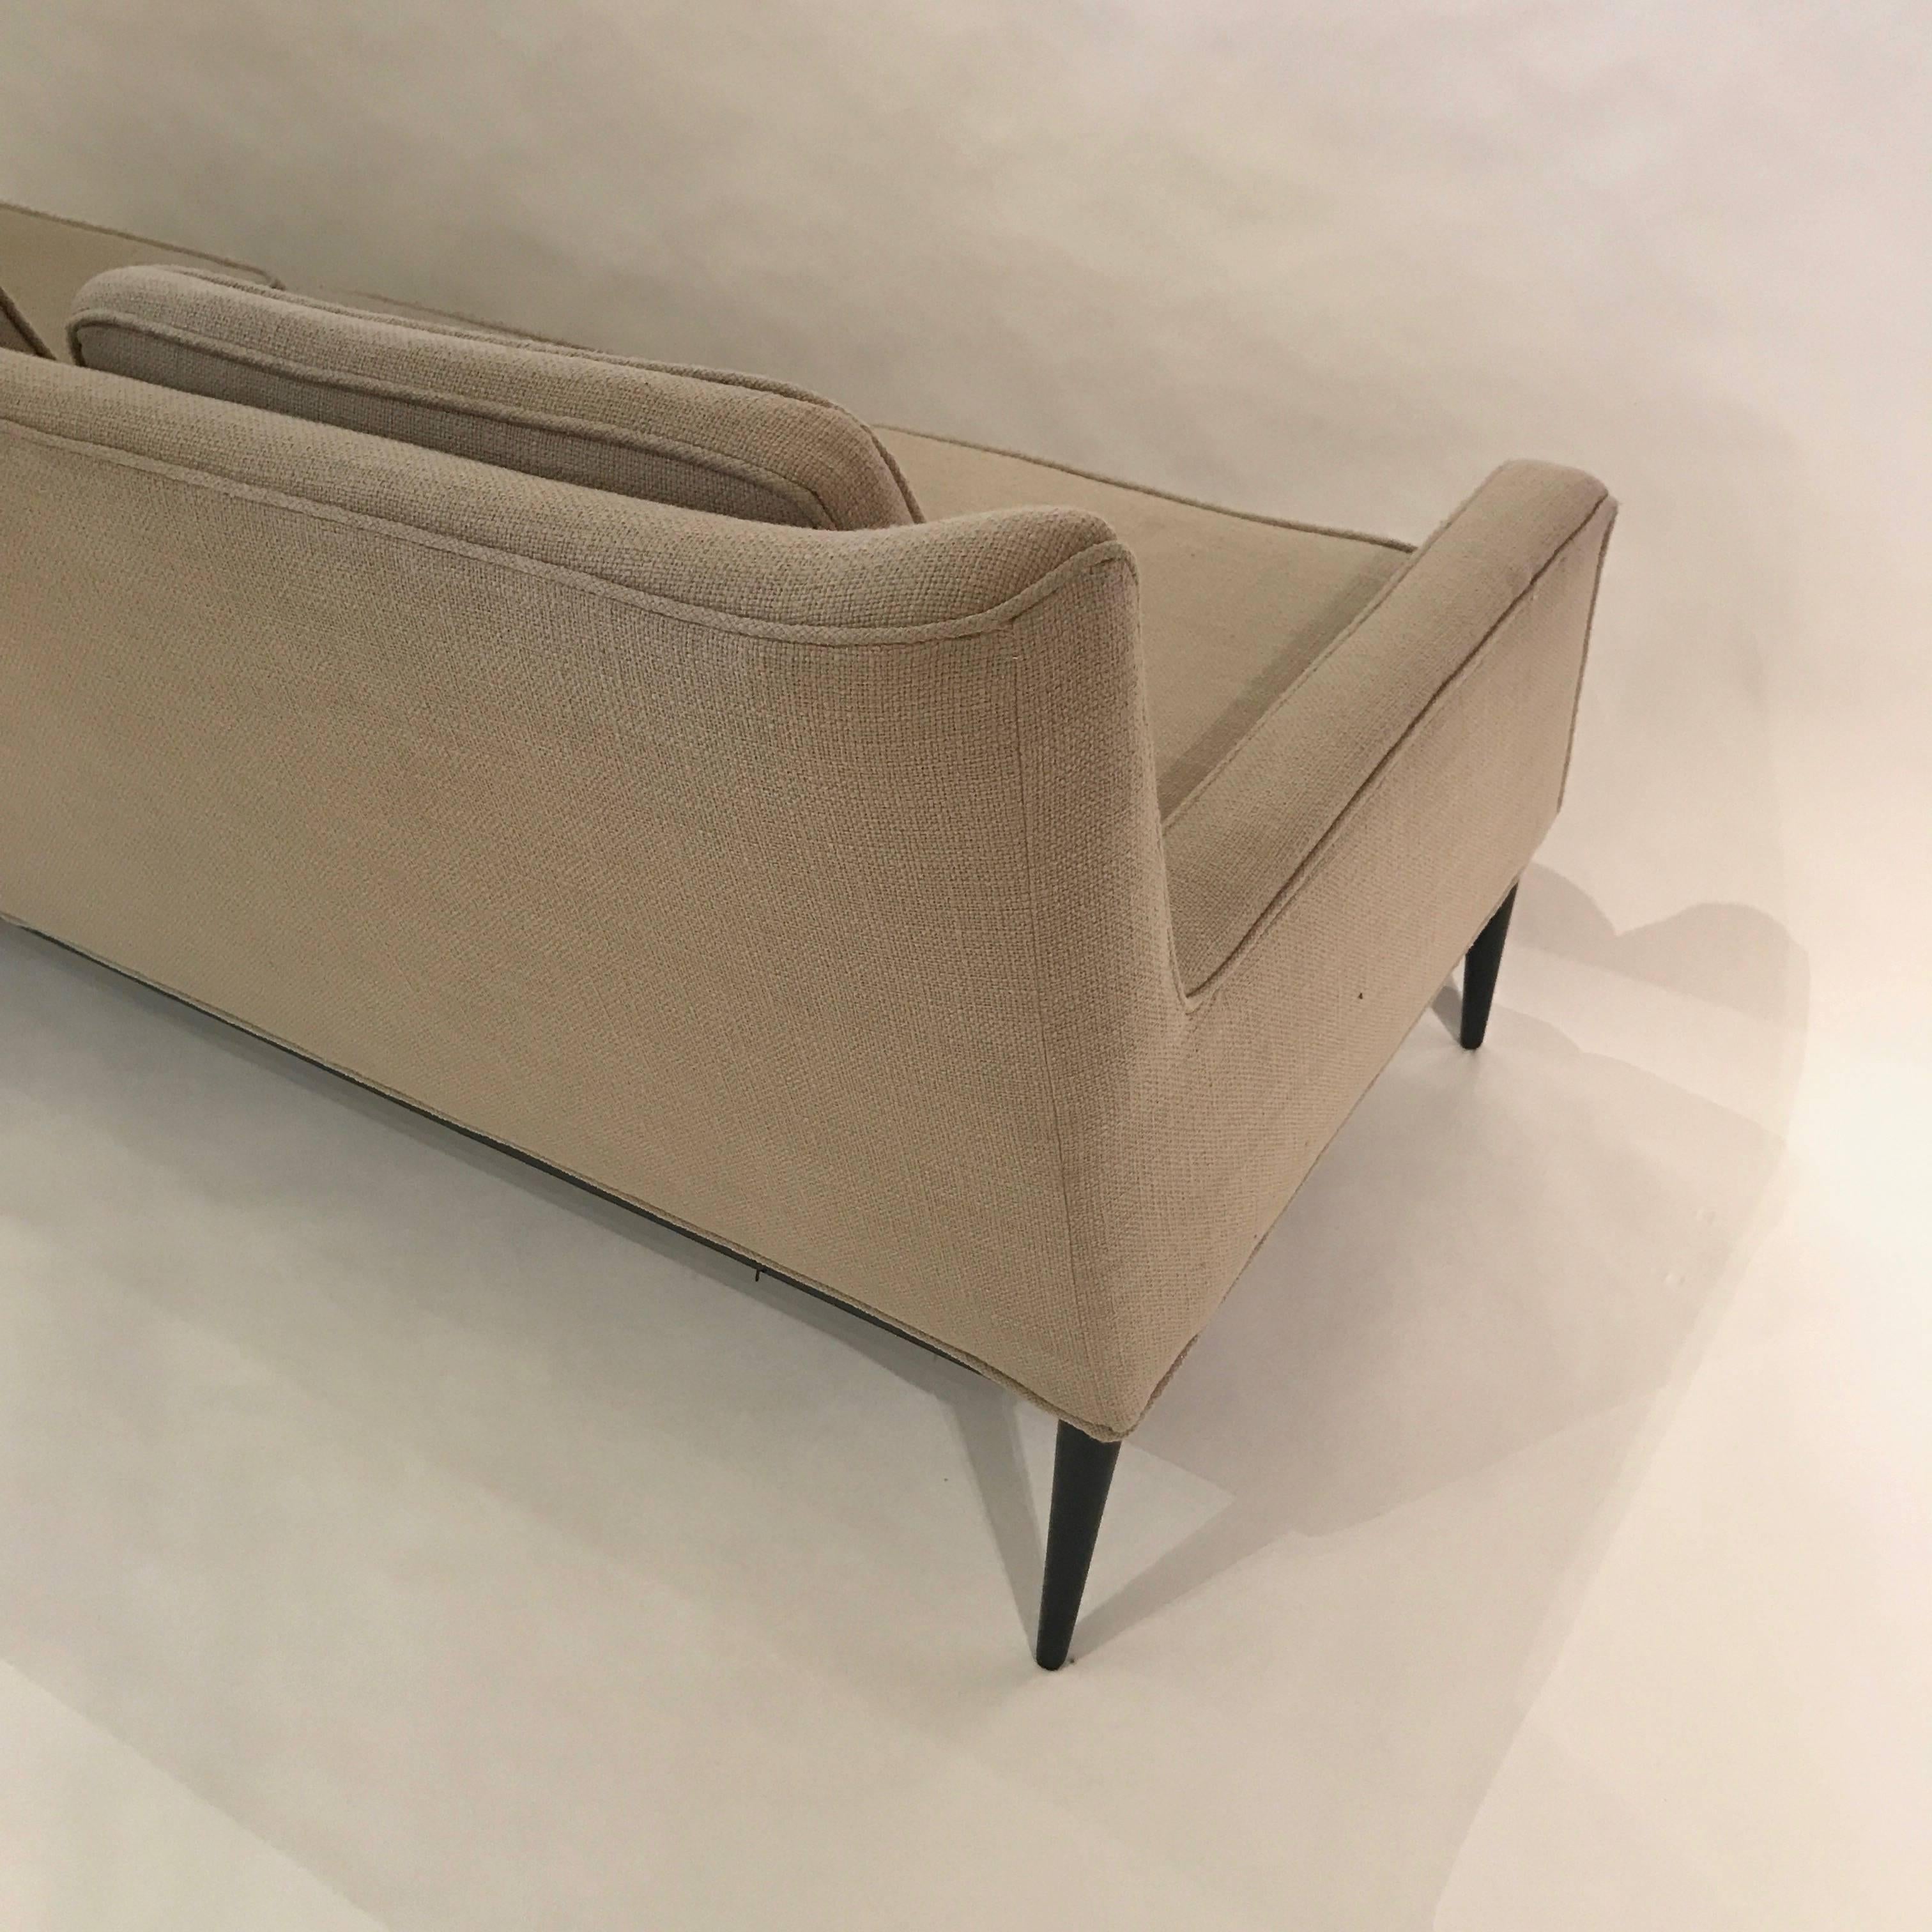 Mid-Century Modern Sleek Midcentury Modern Paul McCobb Sculptural Sofa Model 1307 for Directional